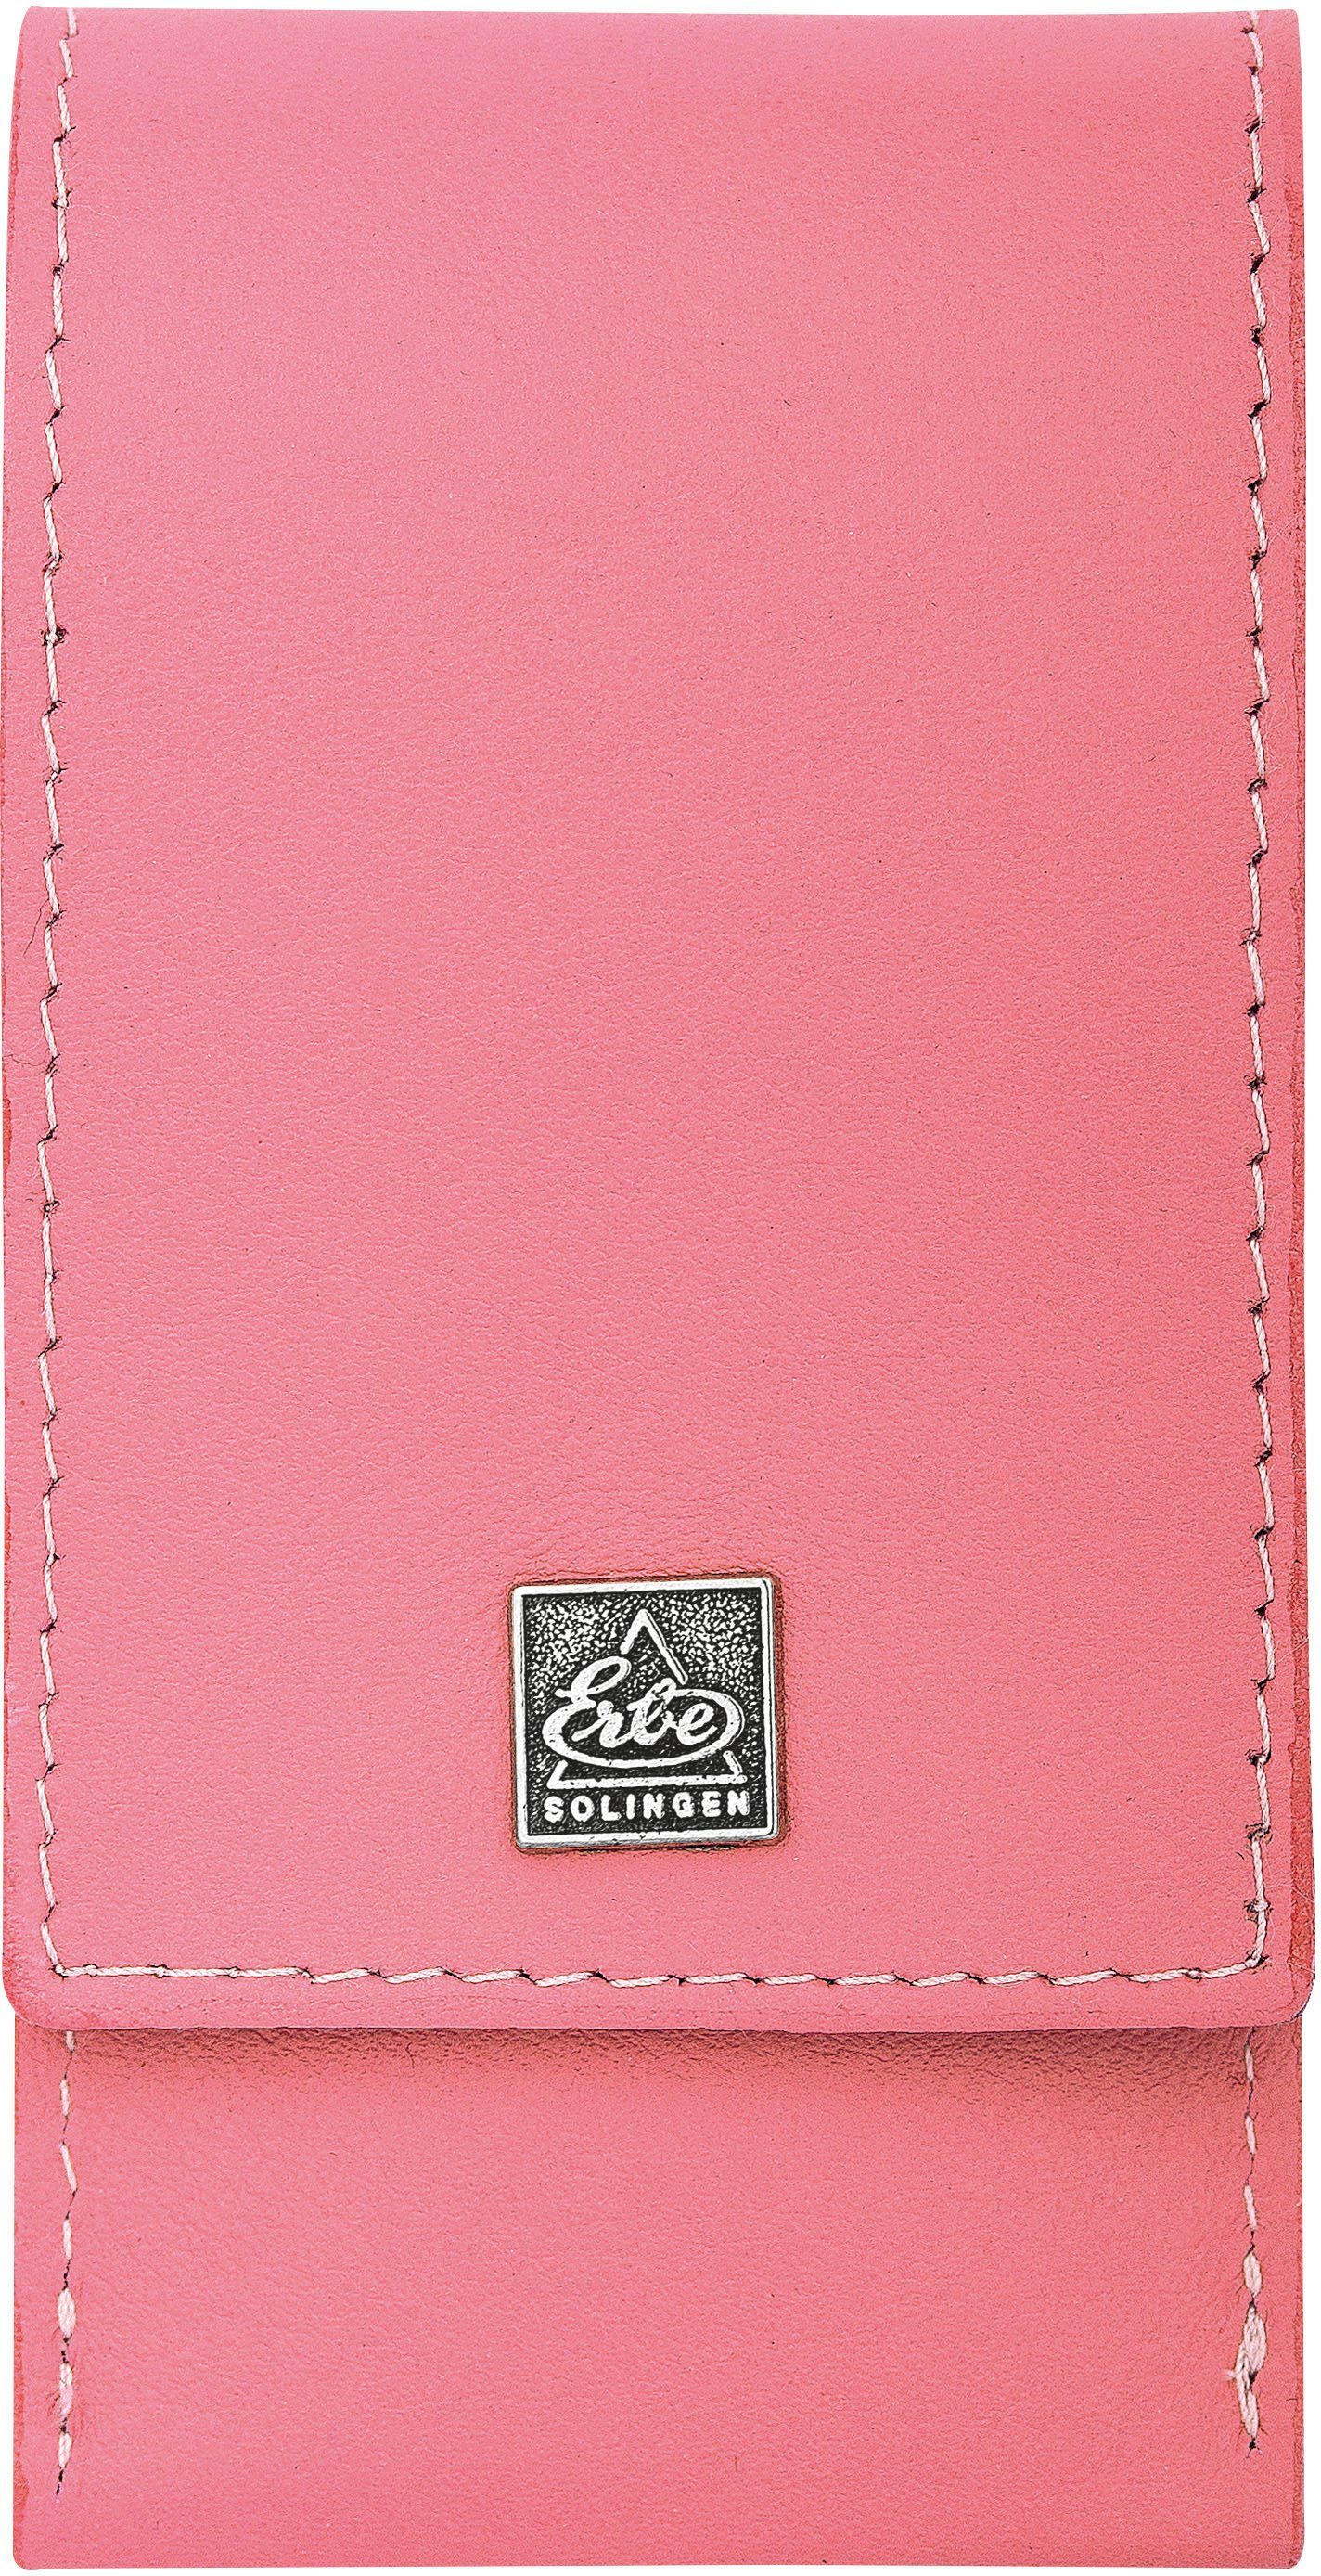 ERBE Maniküre-Etui ERBE Maniküre Set tlg. Serie "Colour", Taschen-Etui 3 3-tlg., pink